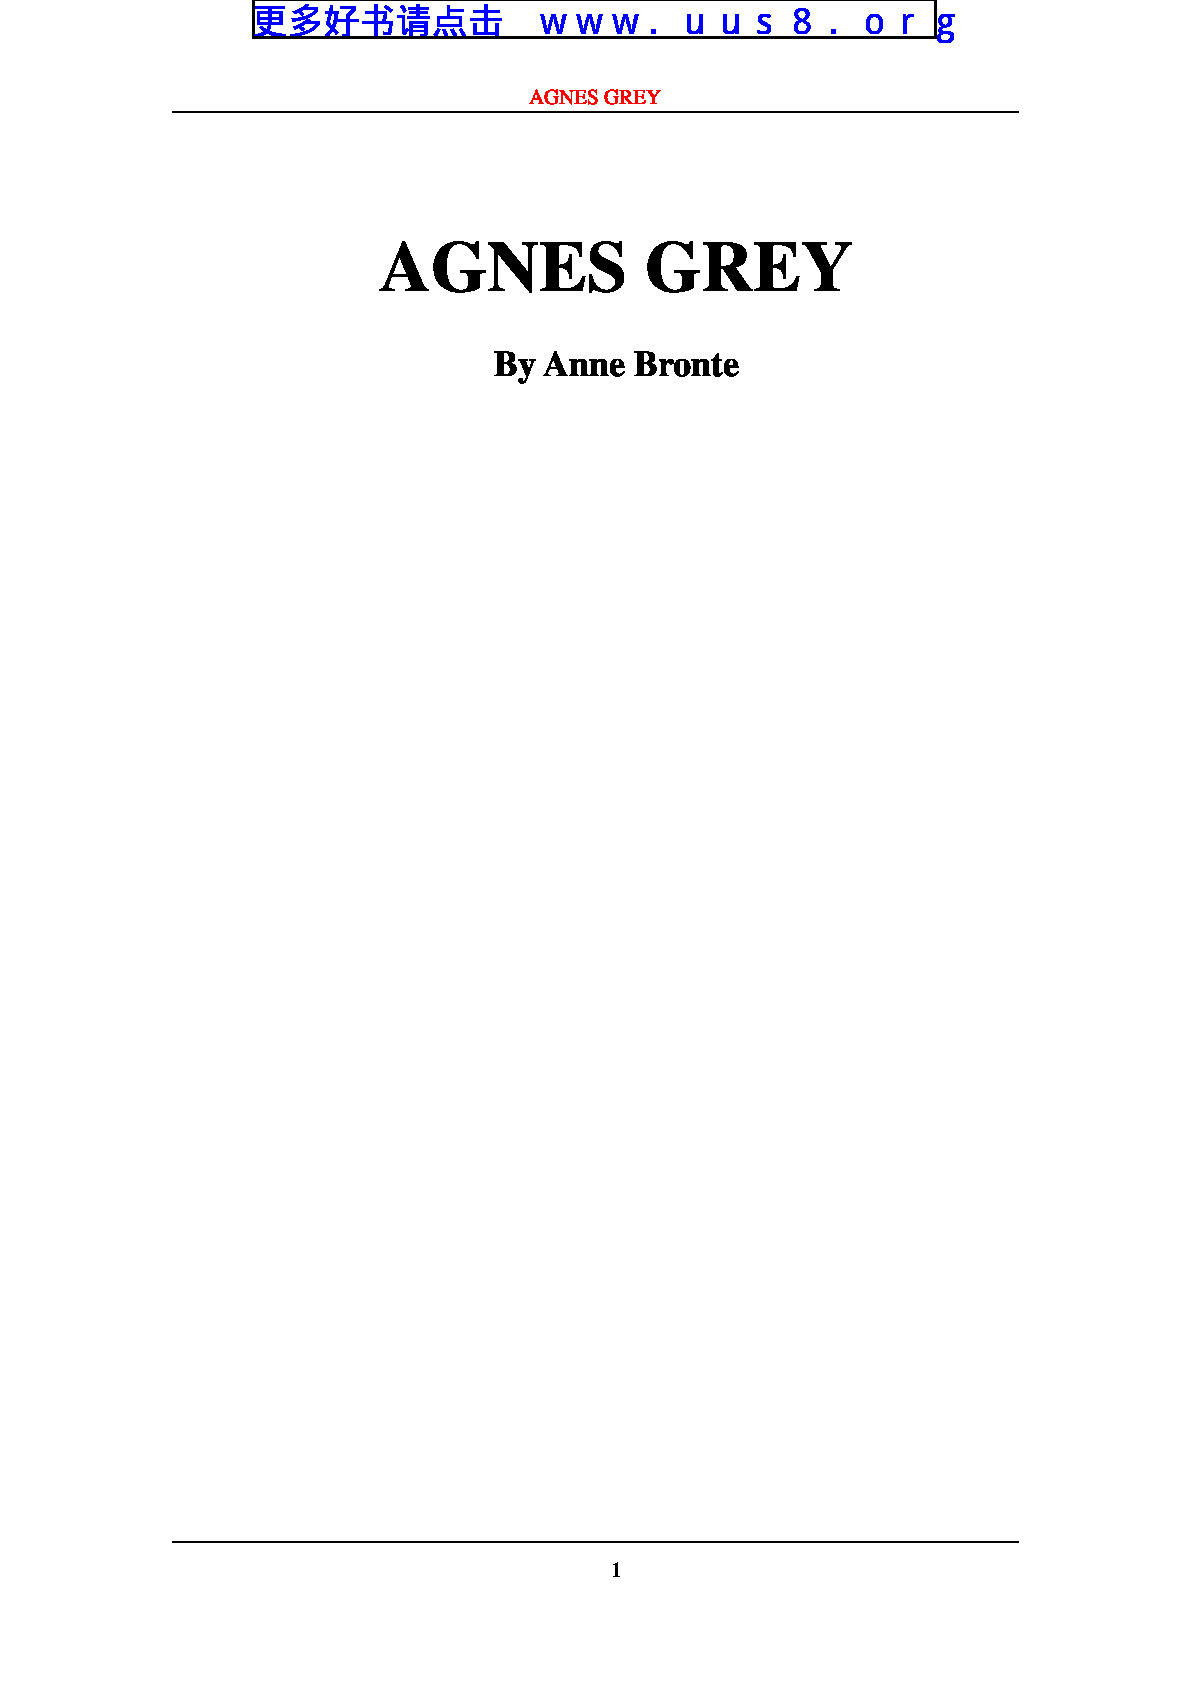 agnes_grey(艾格尼丝·格累)